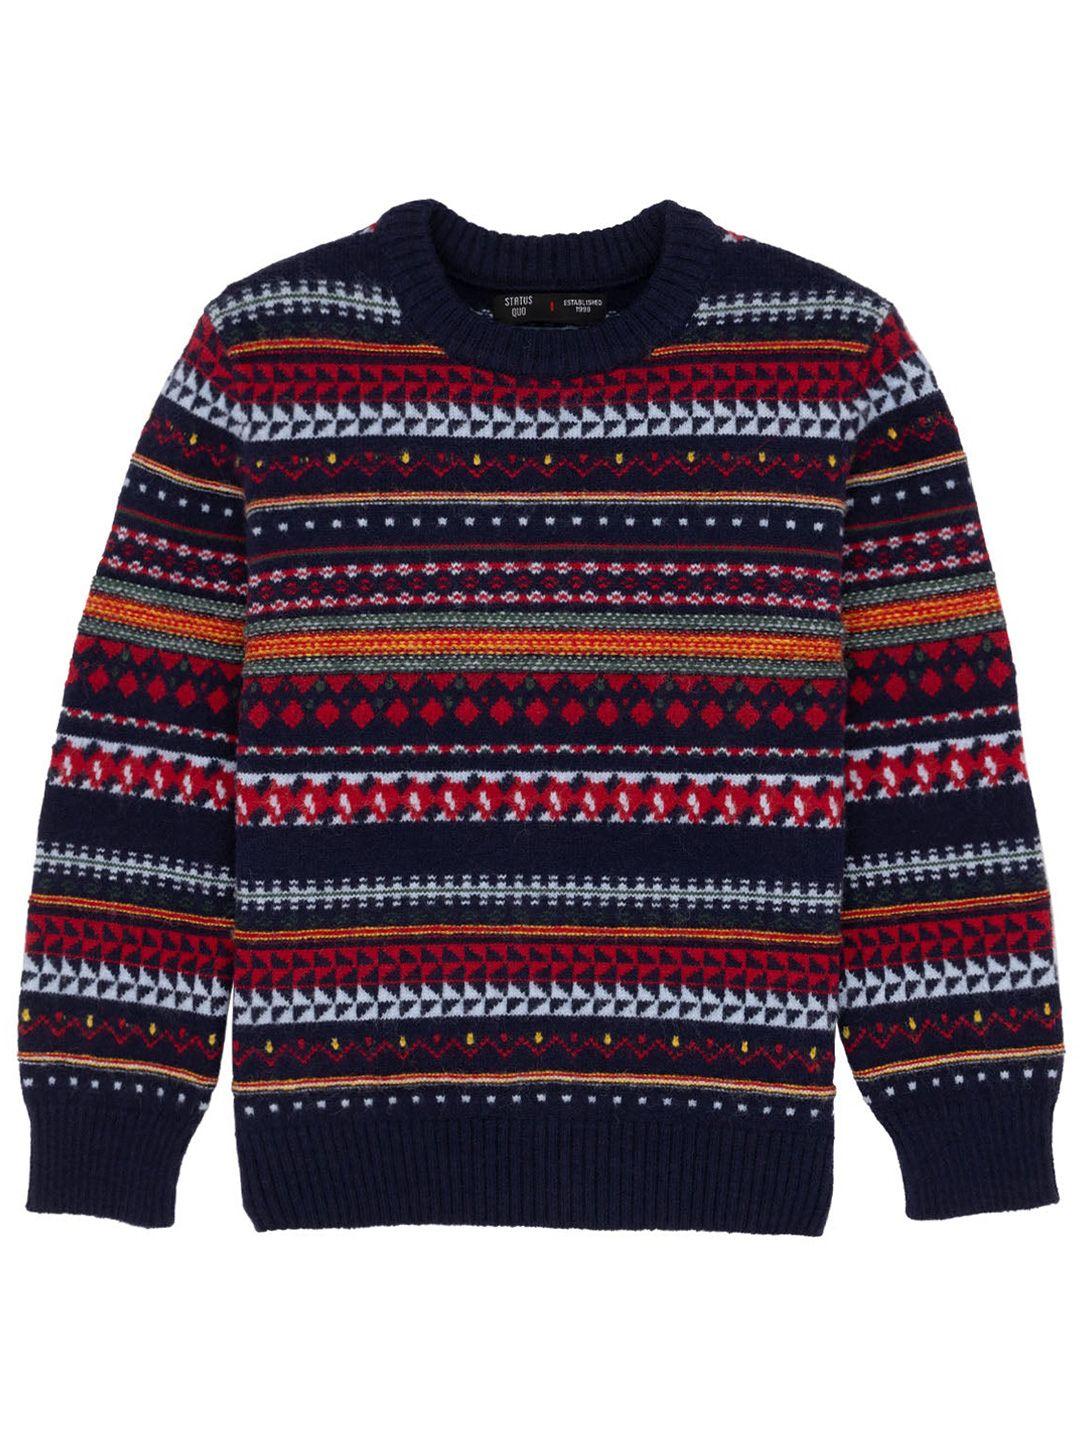 status-quo-boys-geometric-self-design-pullover-sweater